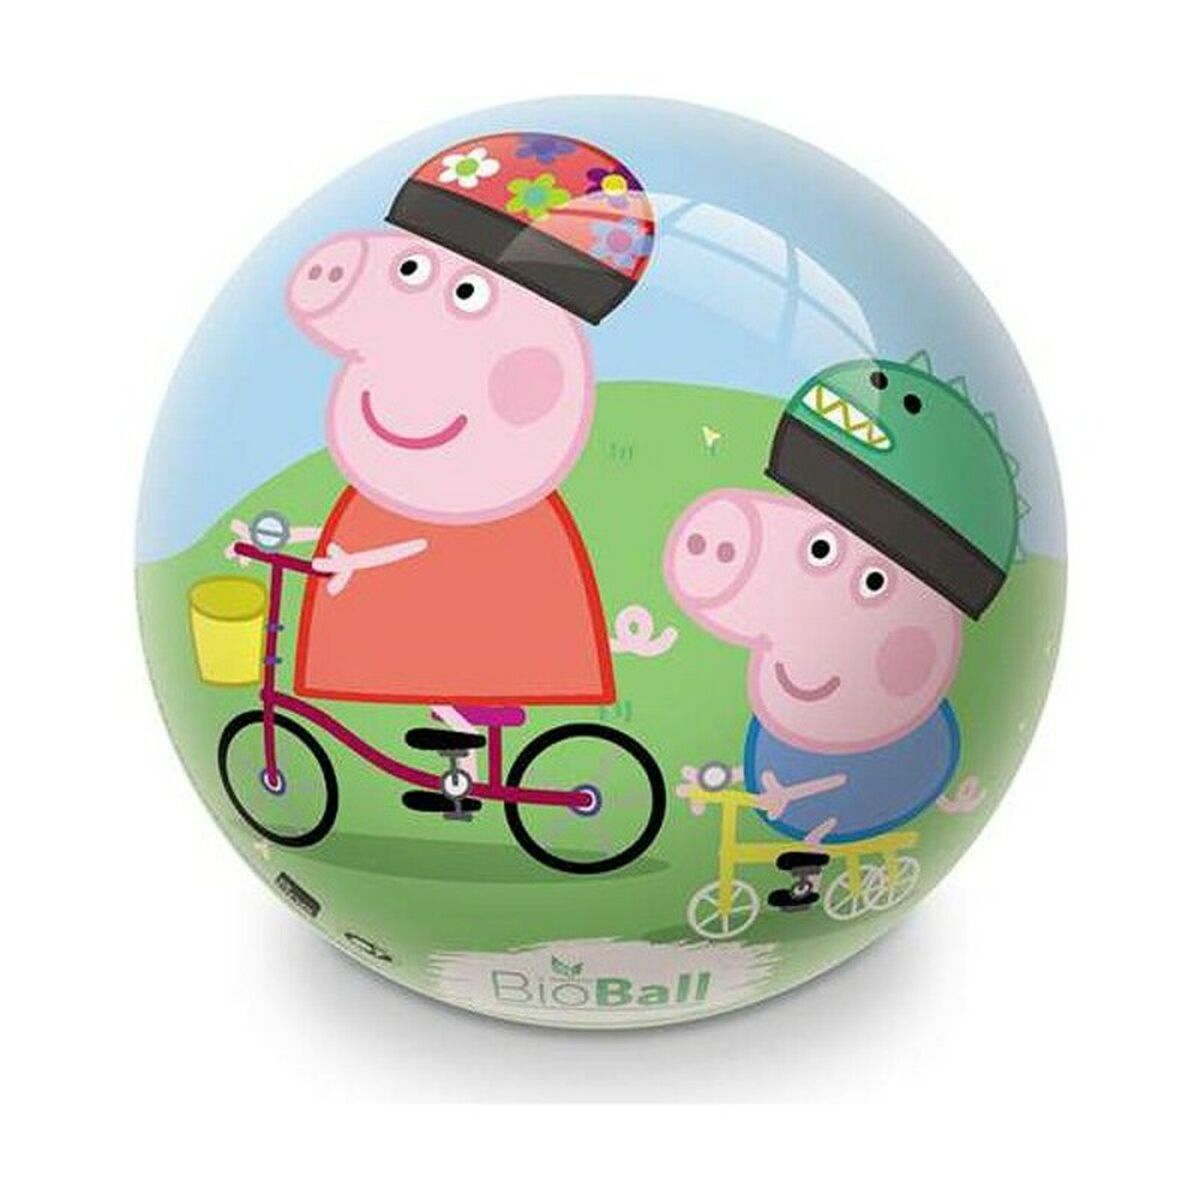 Ballon Peppa Pig Unice Toys (230 mm)